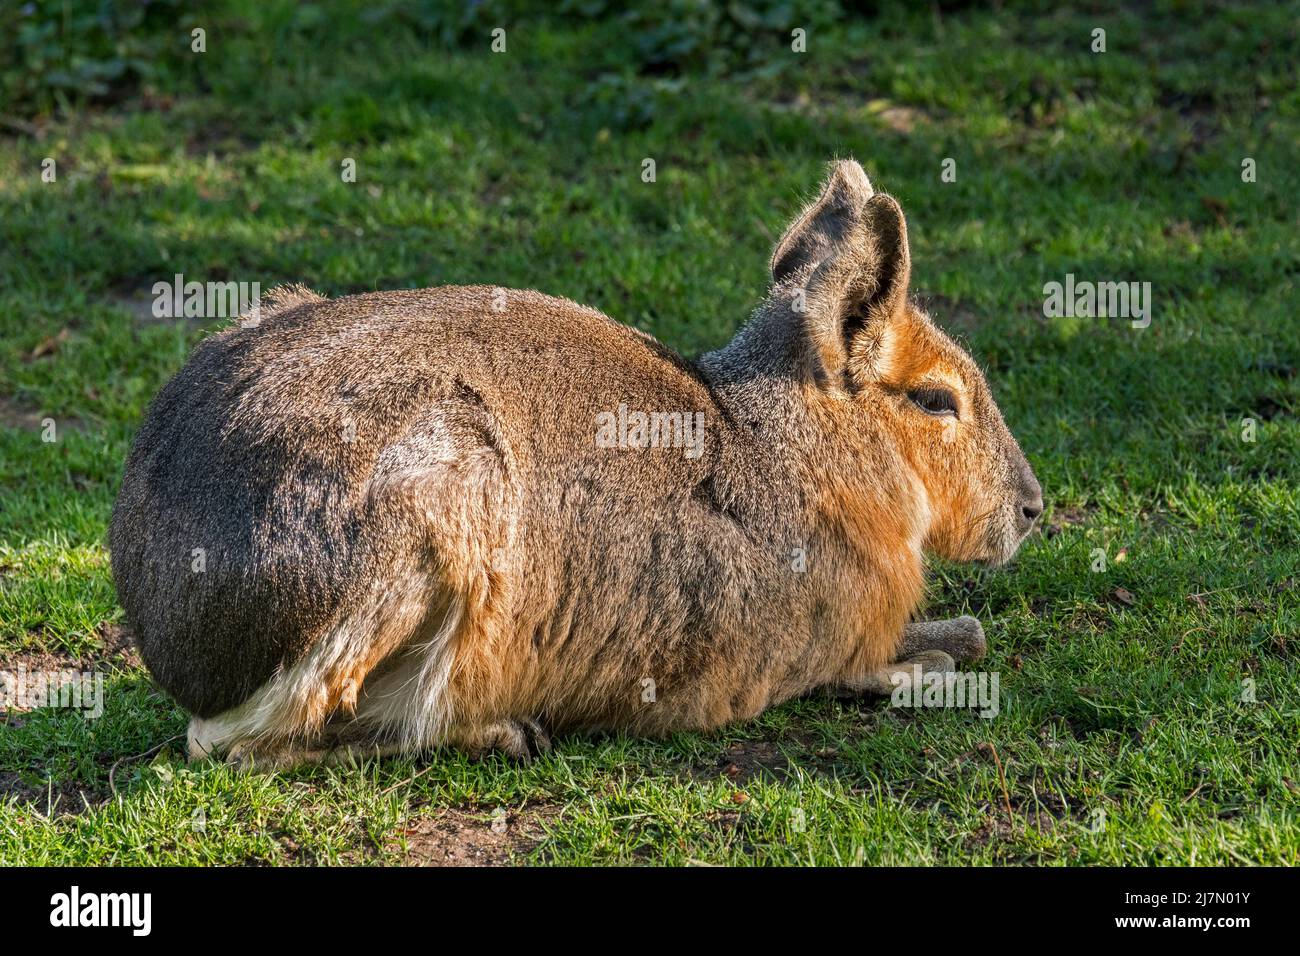 Patagonian mara / Patagonian cavy / Patagonian hare / dillaby (Dolichotis patagonum) native to Argentina, South America Stock Photo